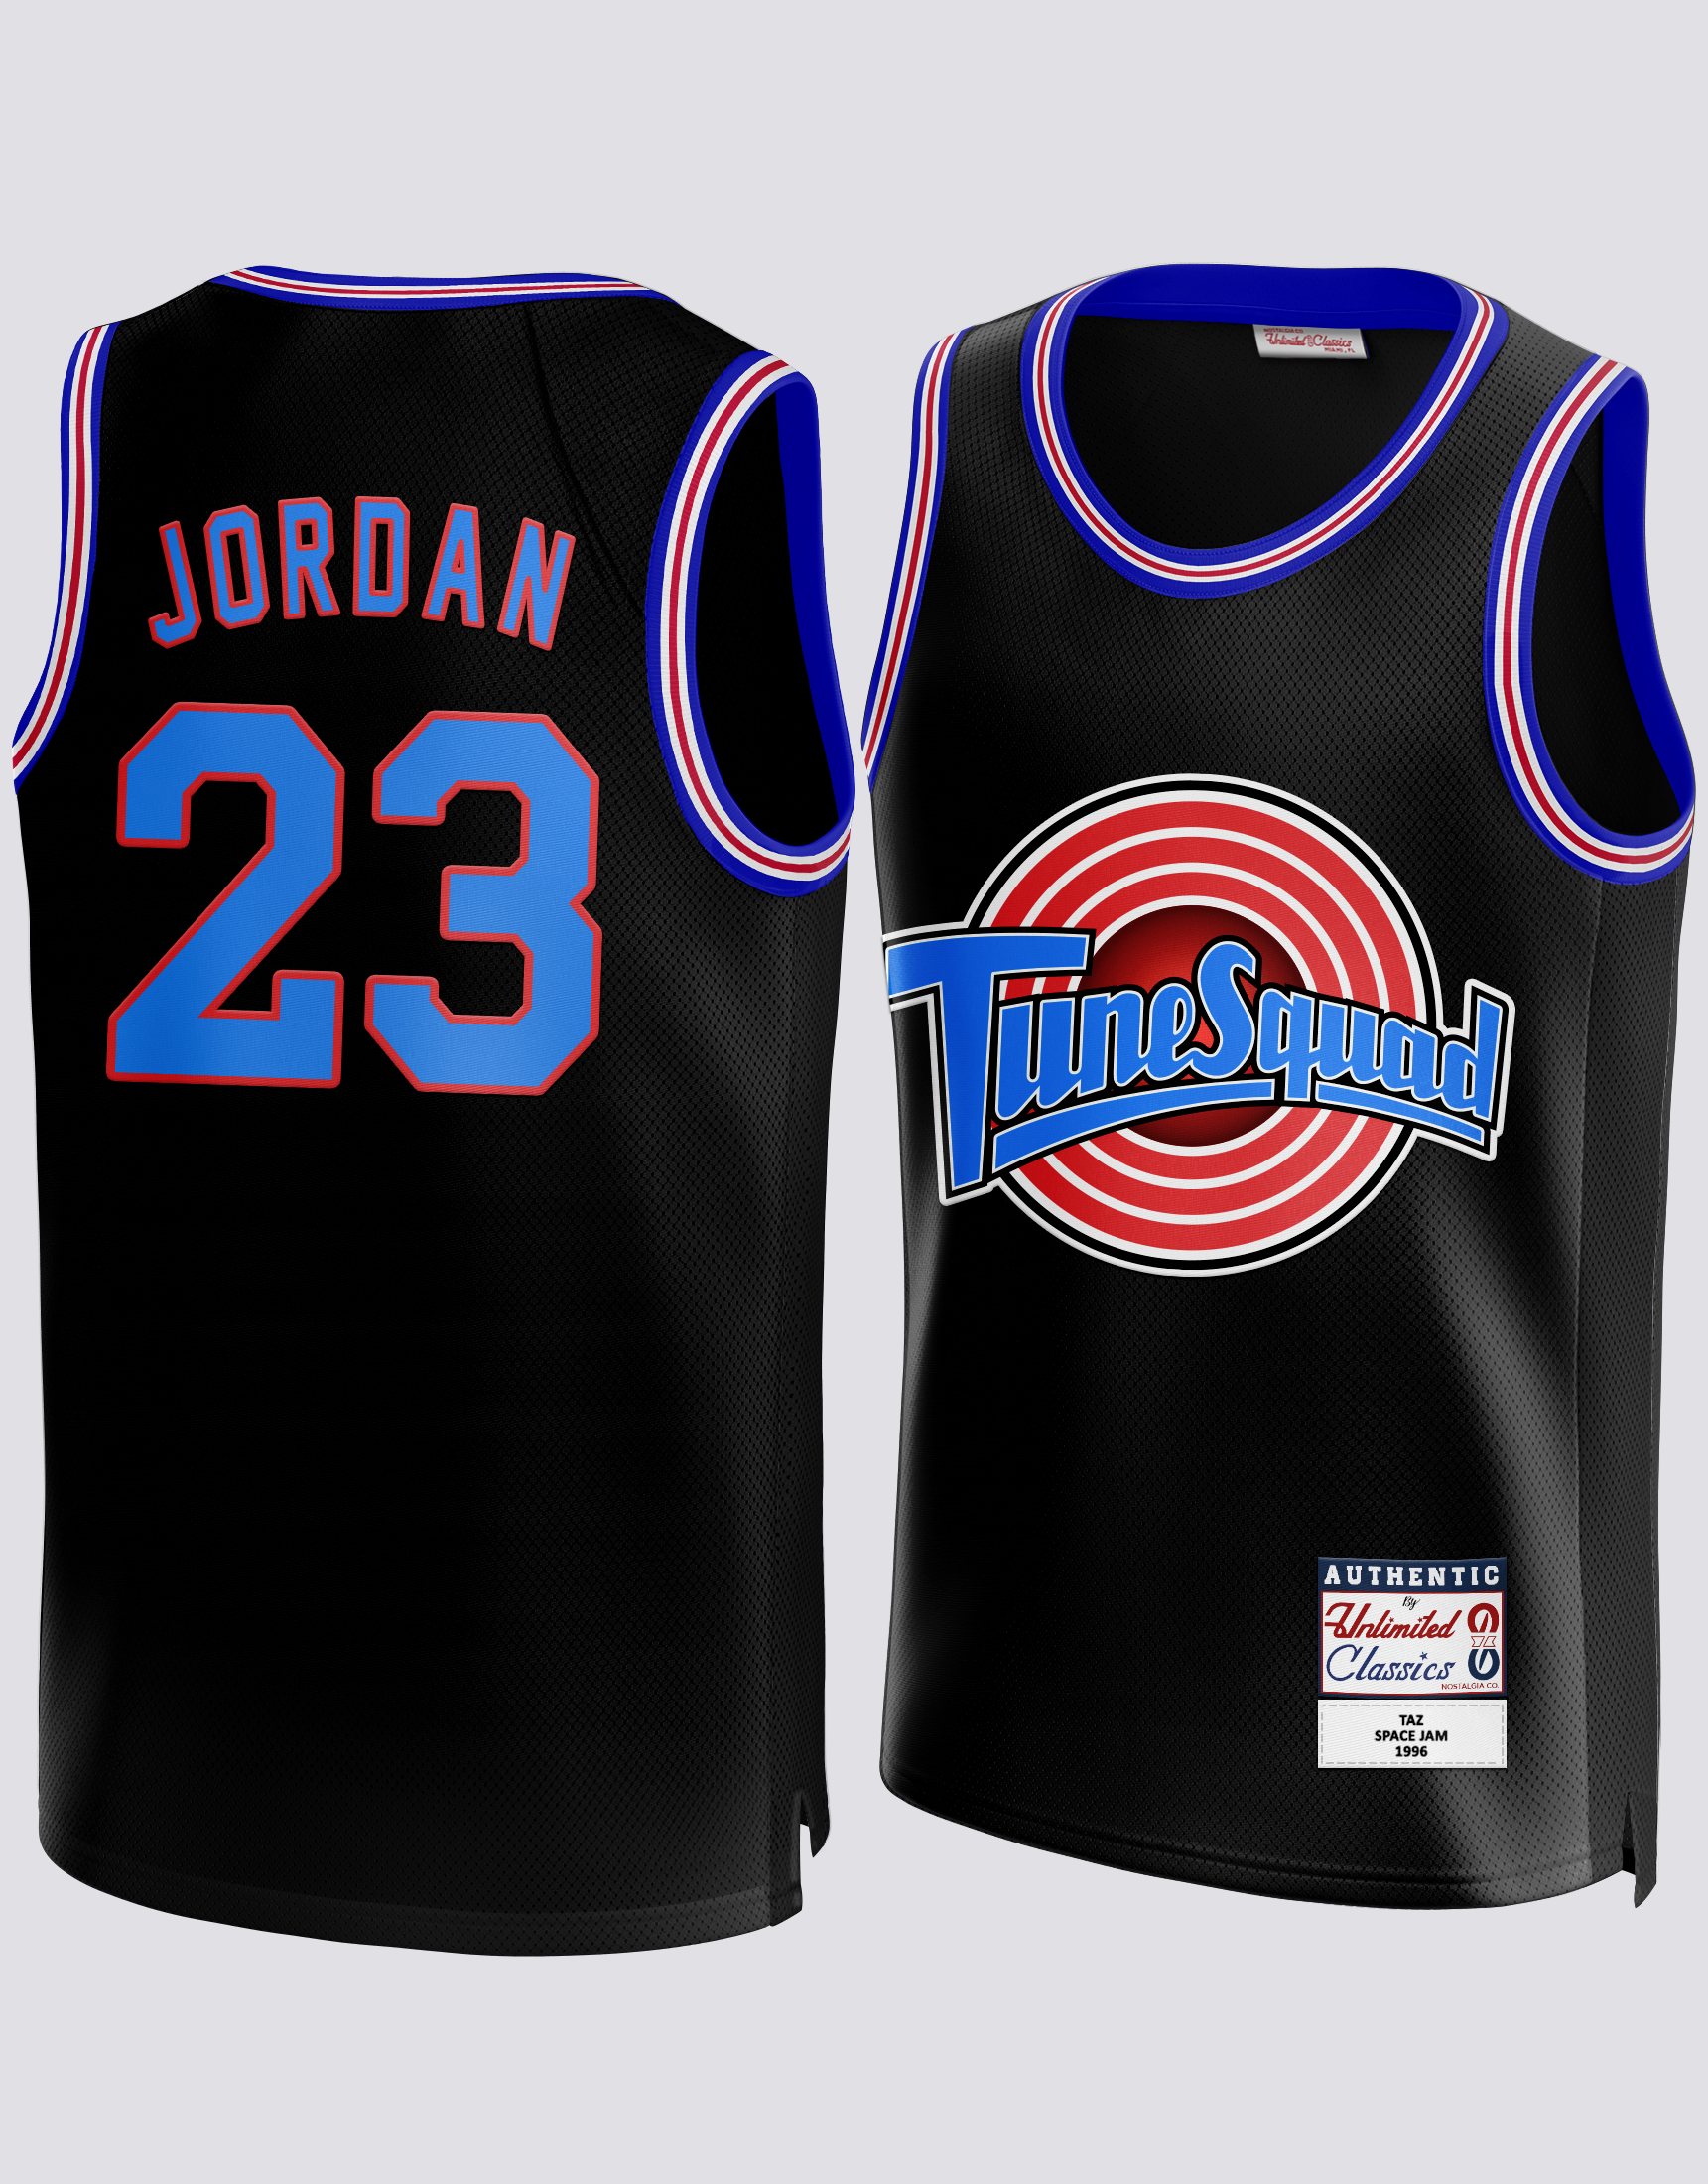 Unlimited Classics Buy #23 Jordan Space Jam Tune Squad Looney Tunes Black Basketball Jersey XL